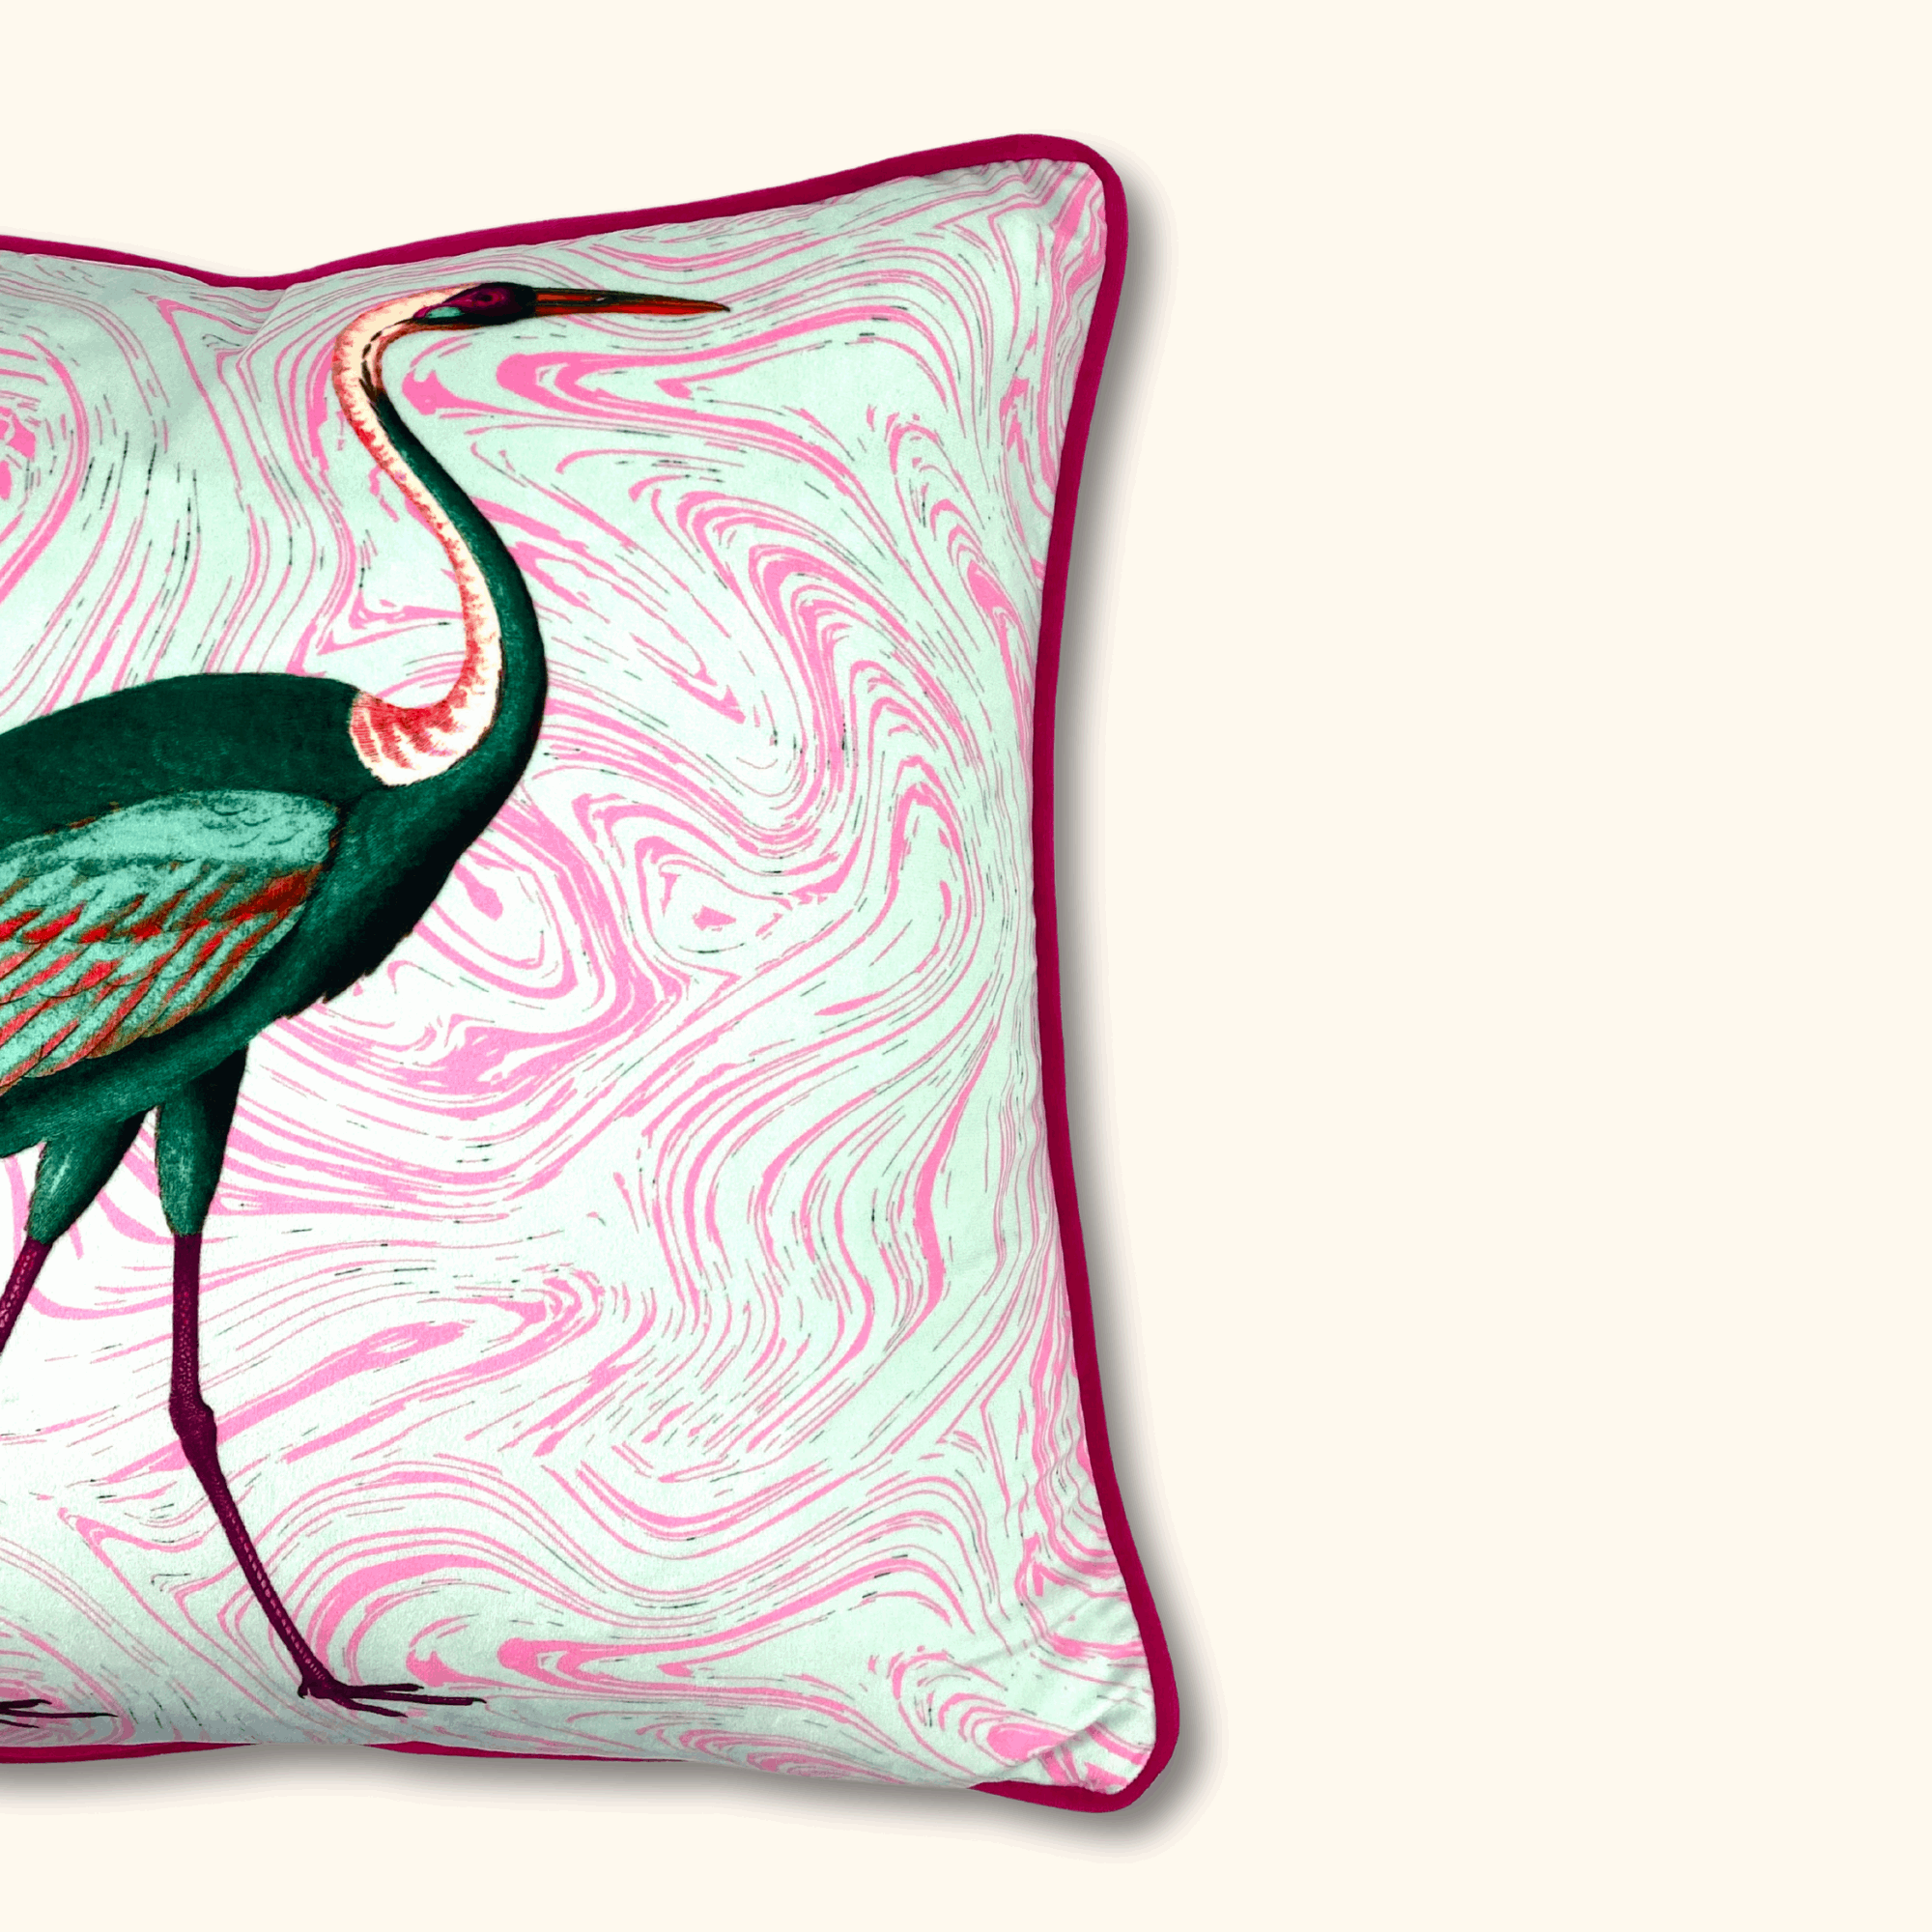 Velvet Bird Hot Pink Large Cushion Cover - Sunshine Thrift - Cushion covers